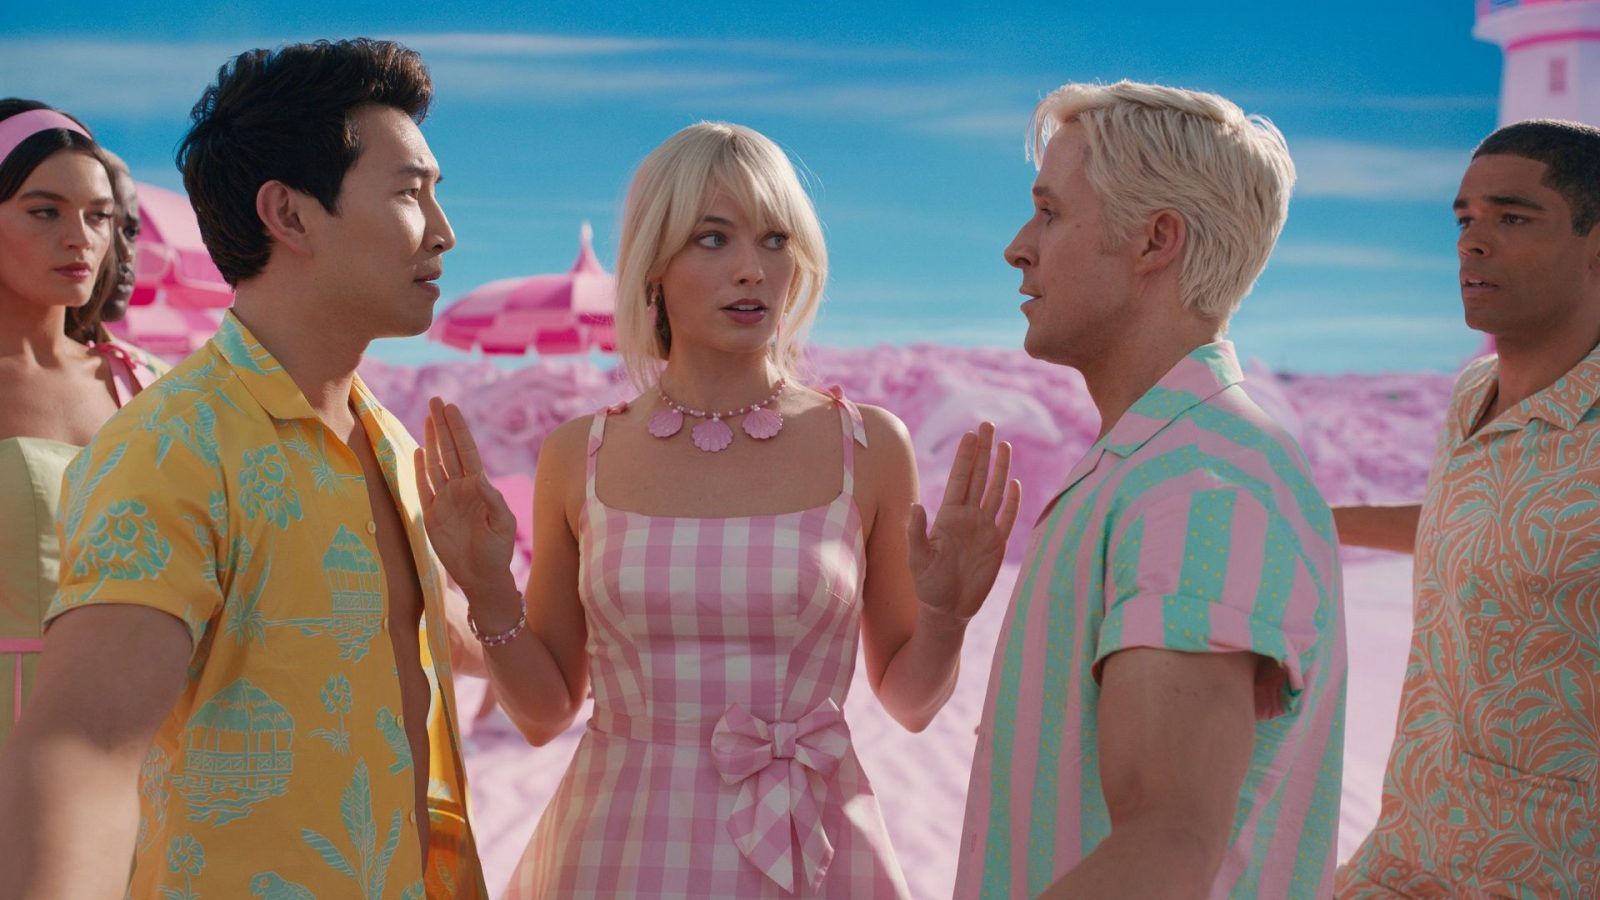 Grace mengen toenemen Barbie' movie trailer introduces fans to its galaxy of A-list cast members